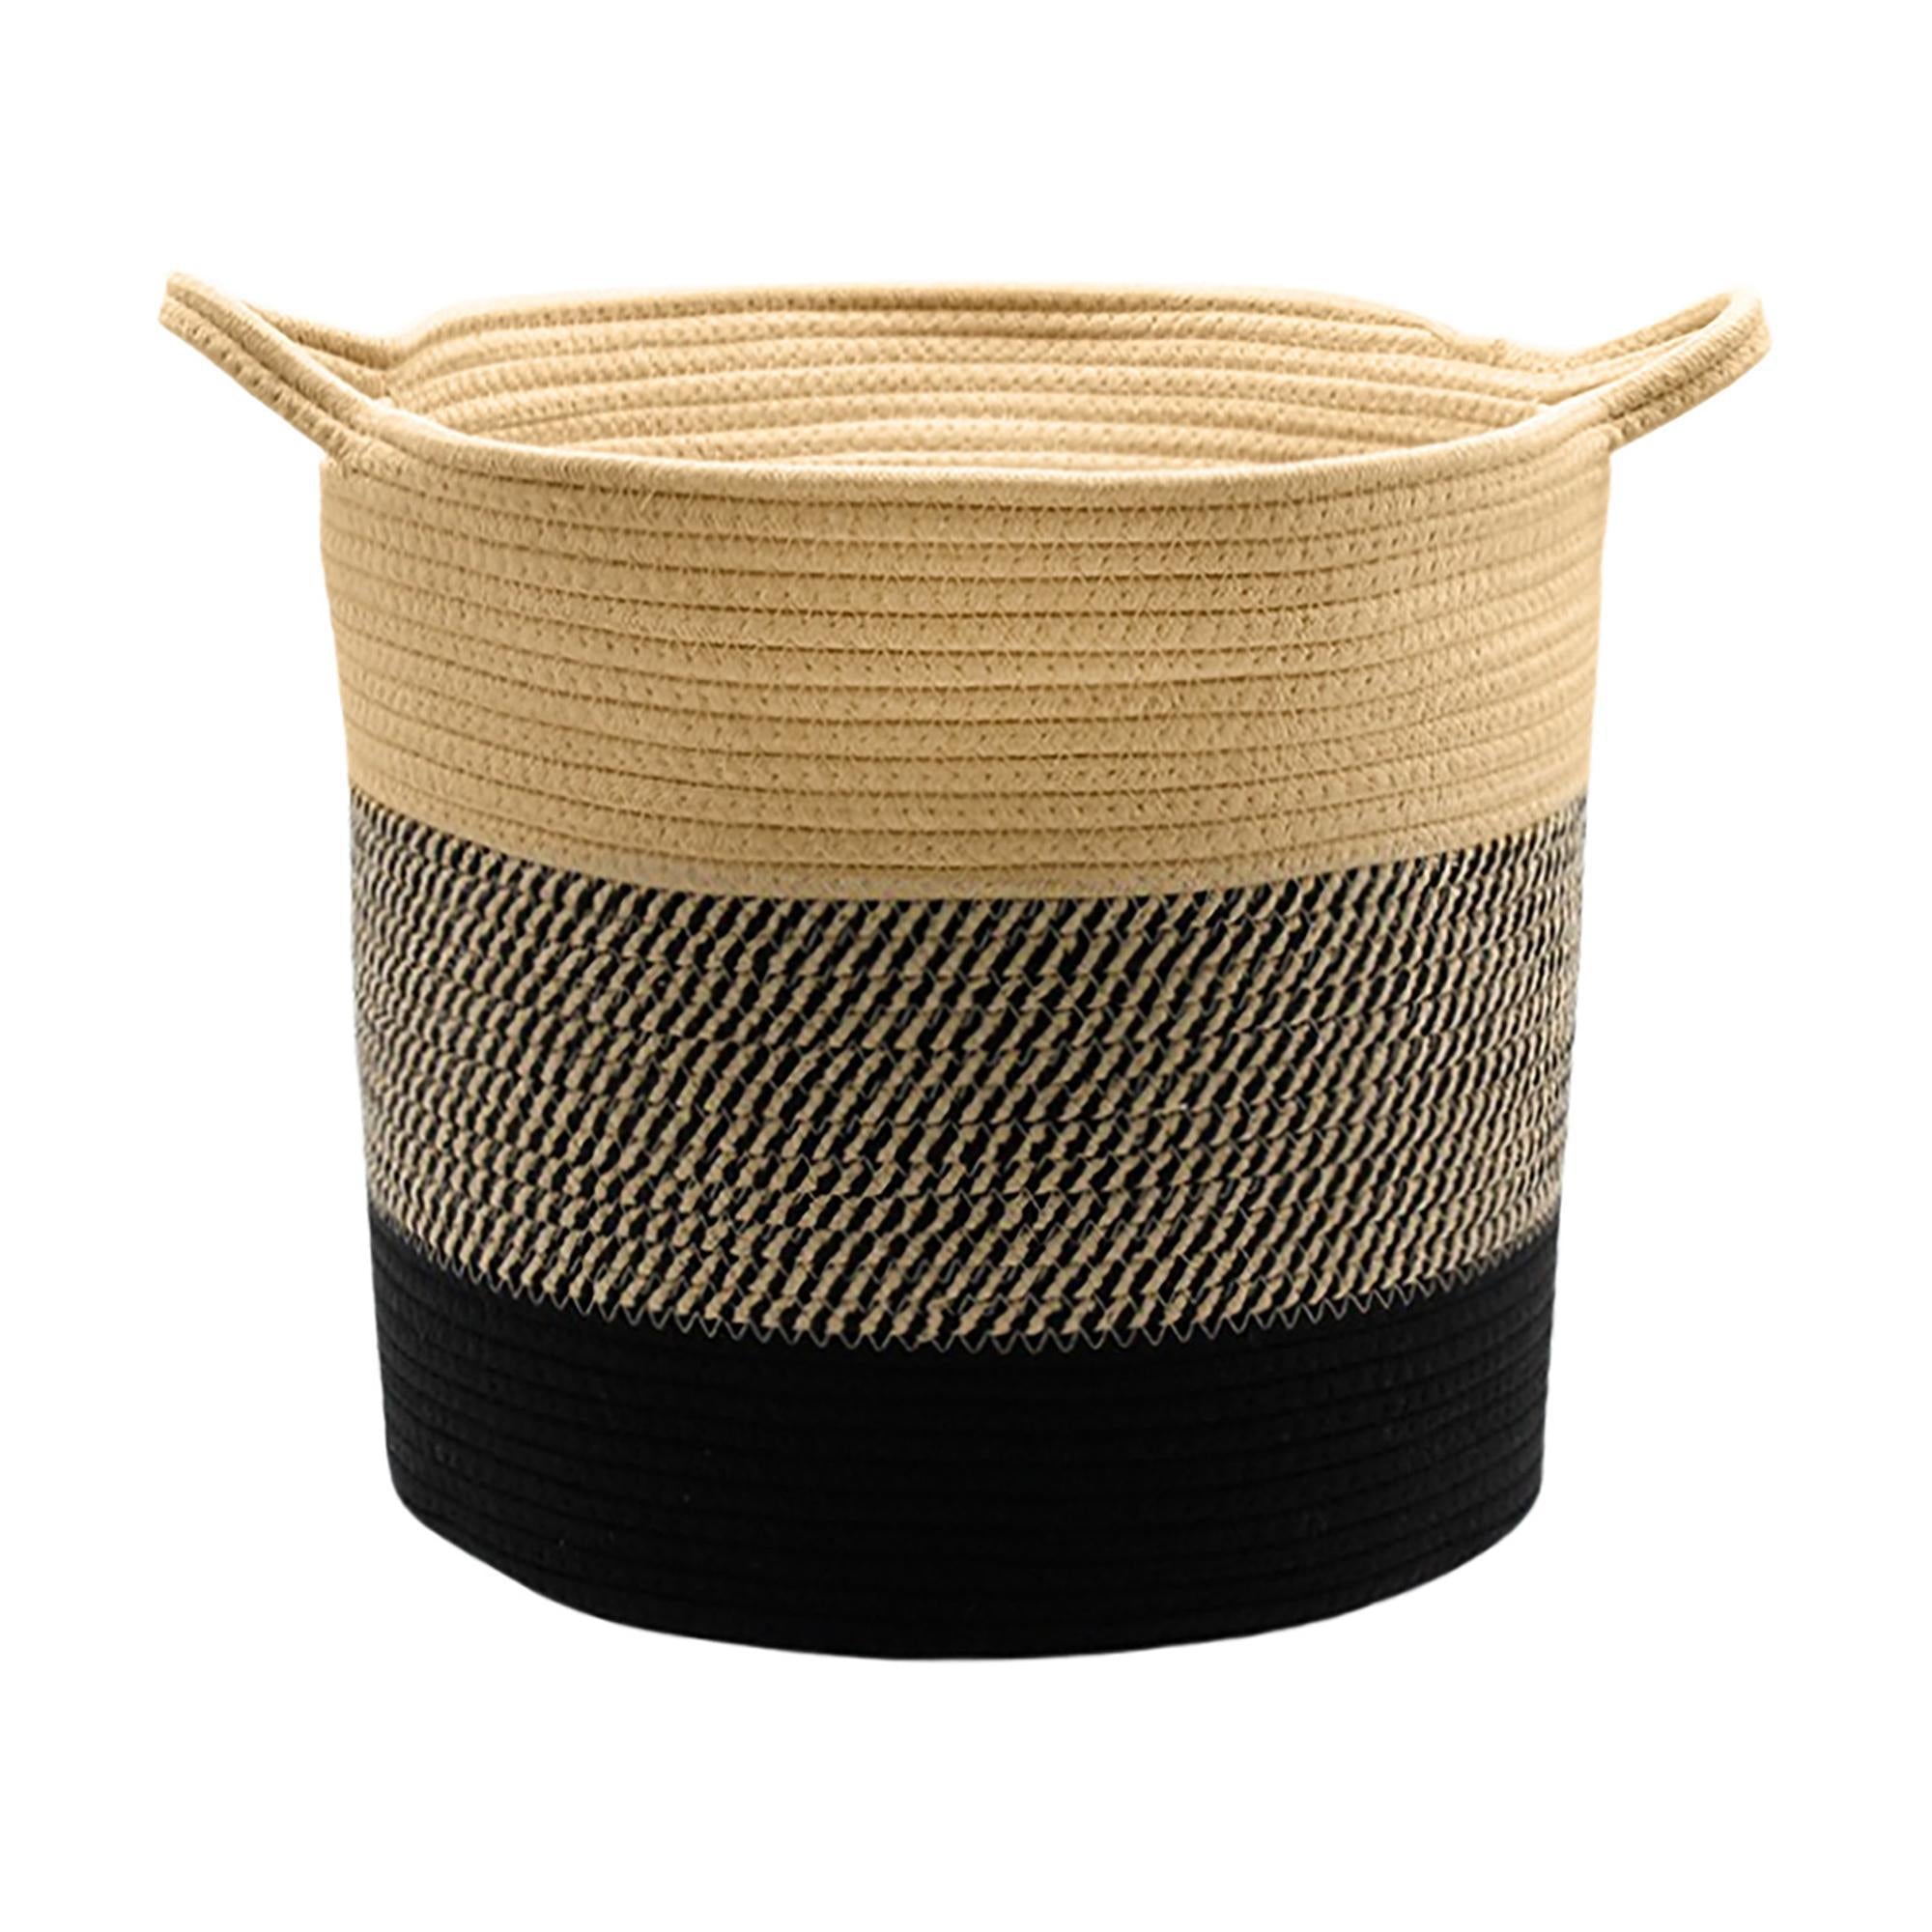 Woven Basket - Natural, Gray & Black - 15.75"Di